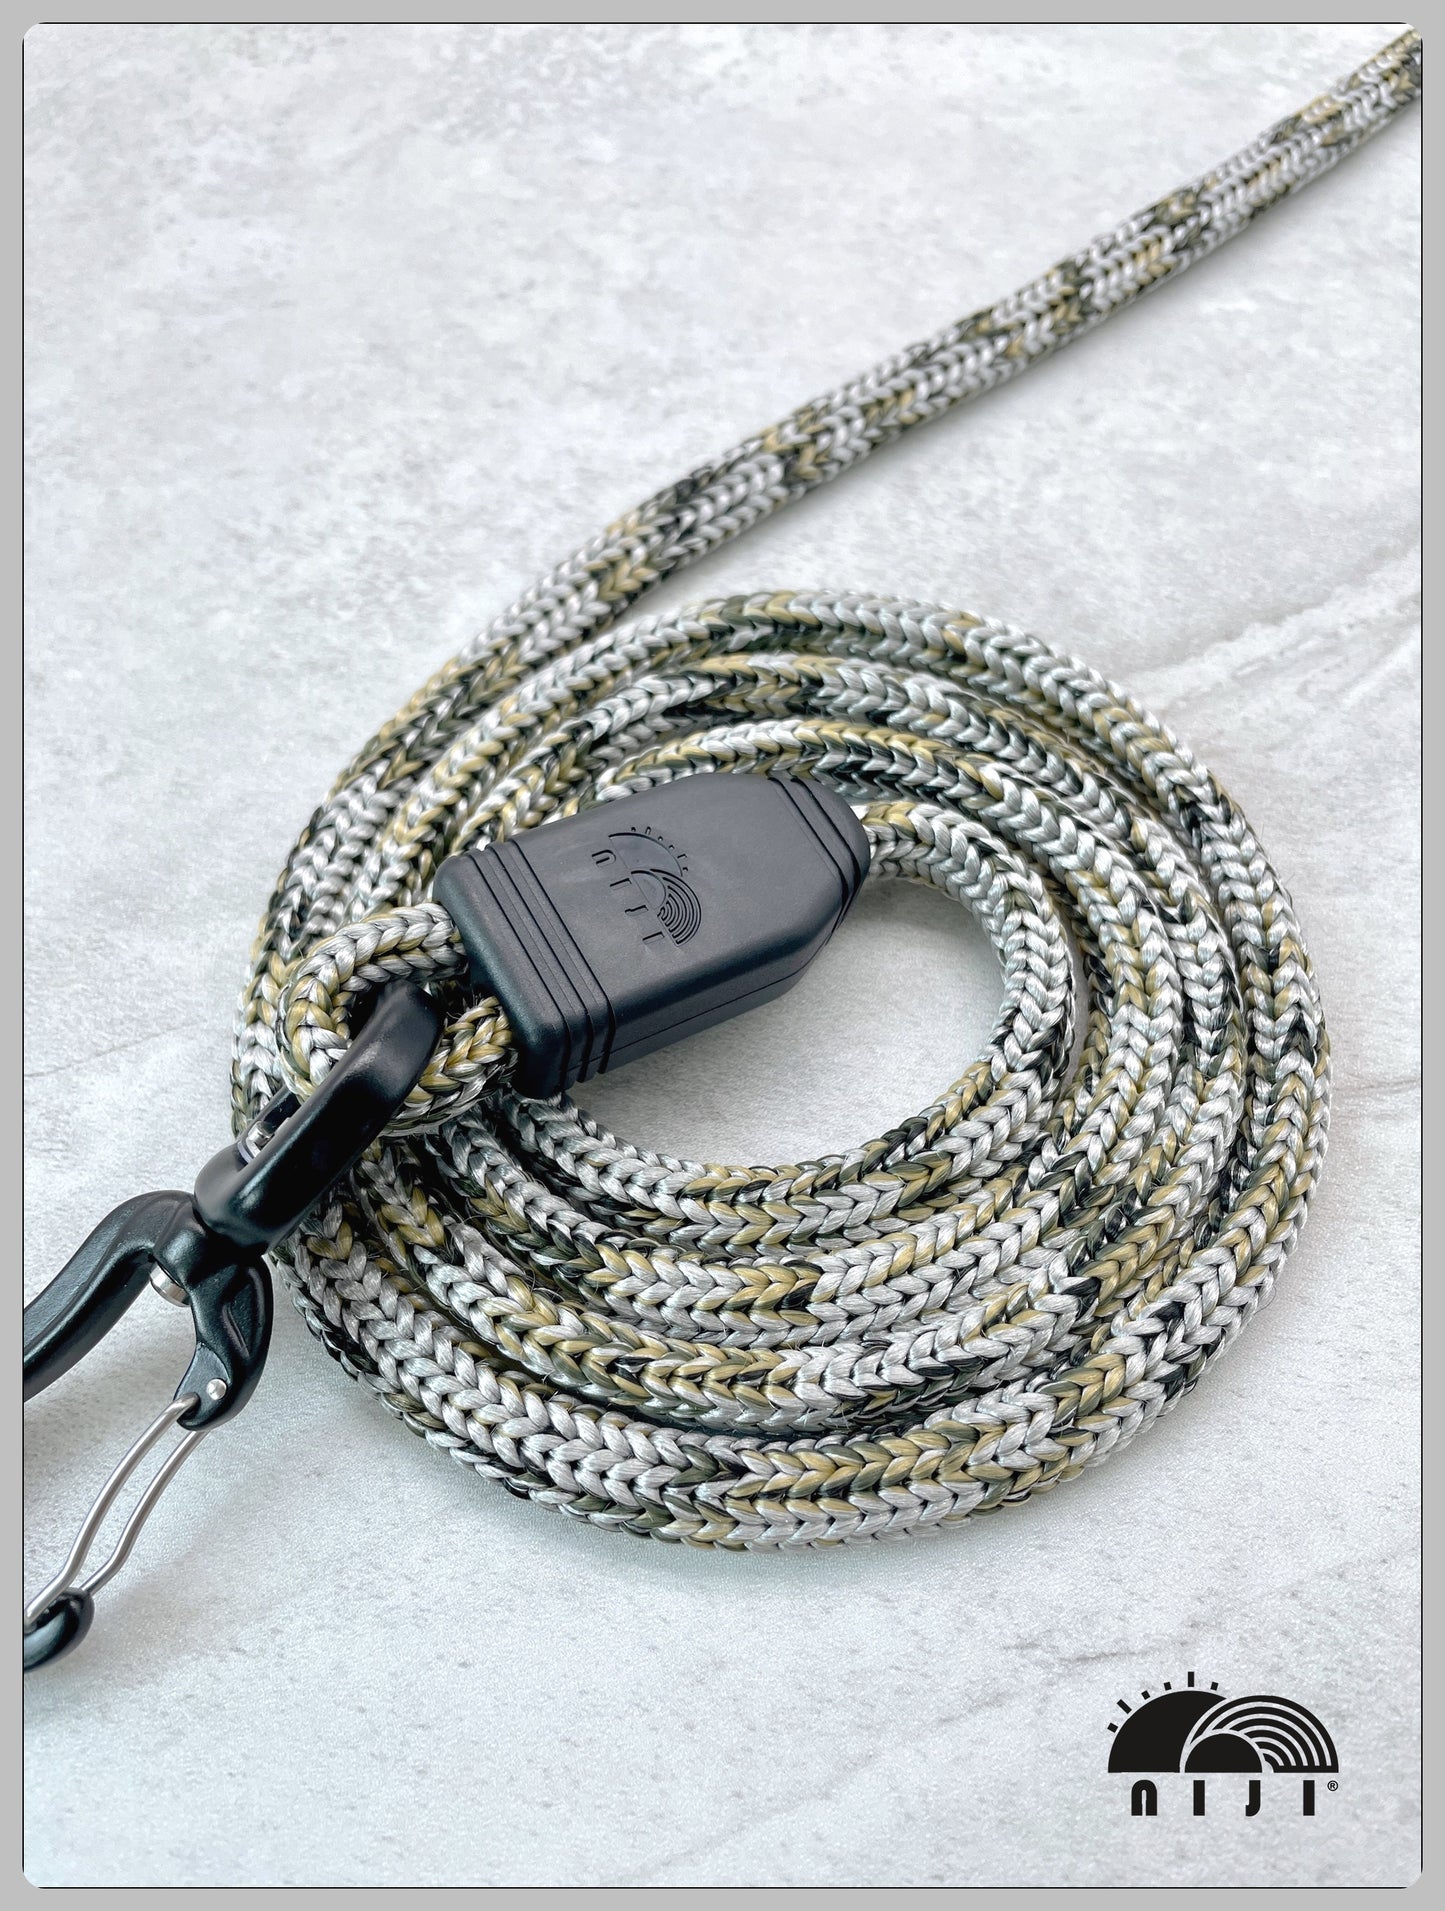 niji loop handle dog leash Knitted 9mm Silver camo